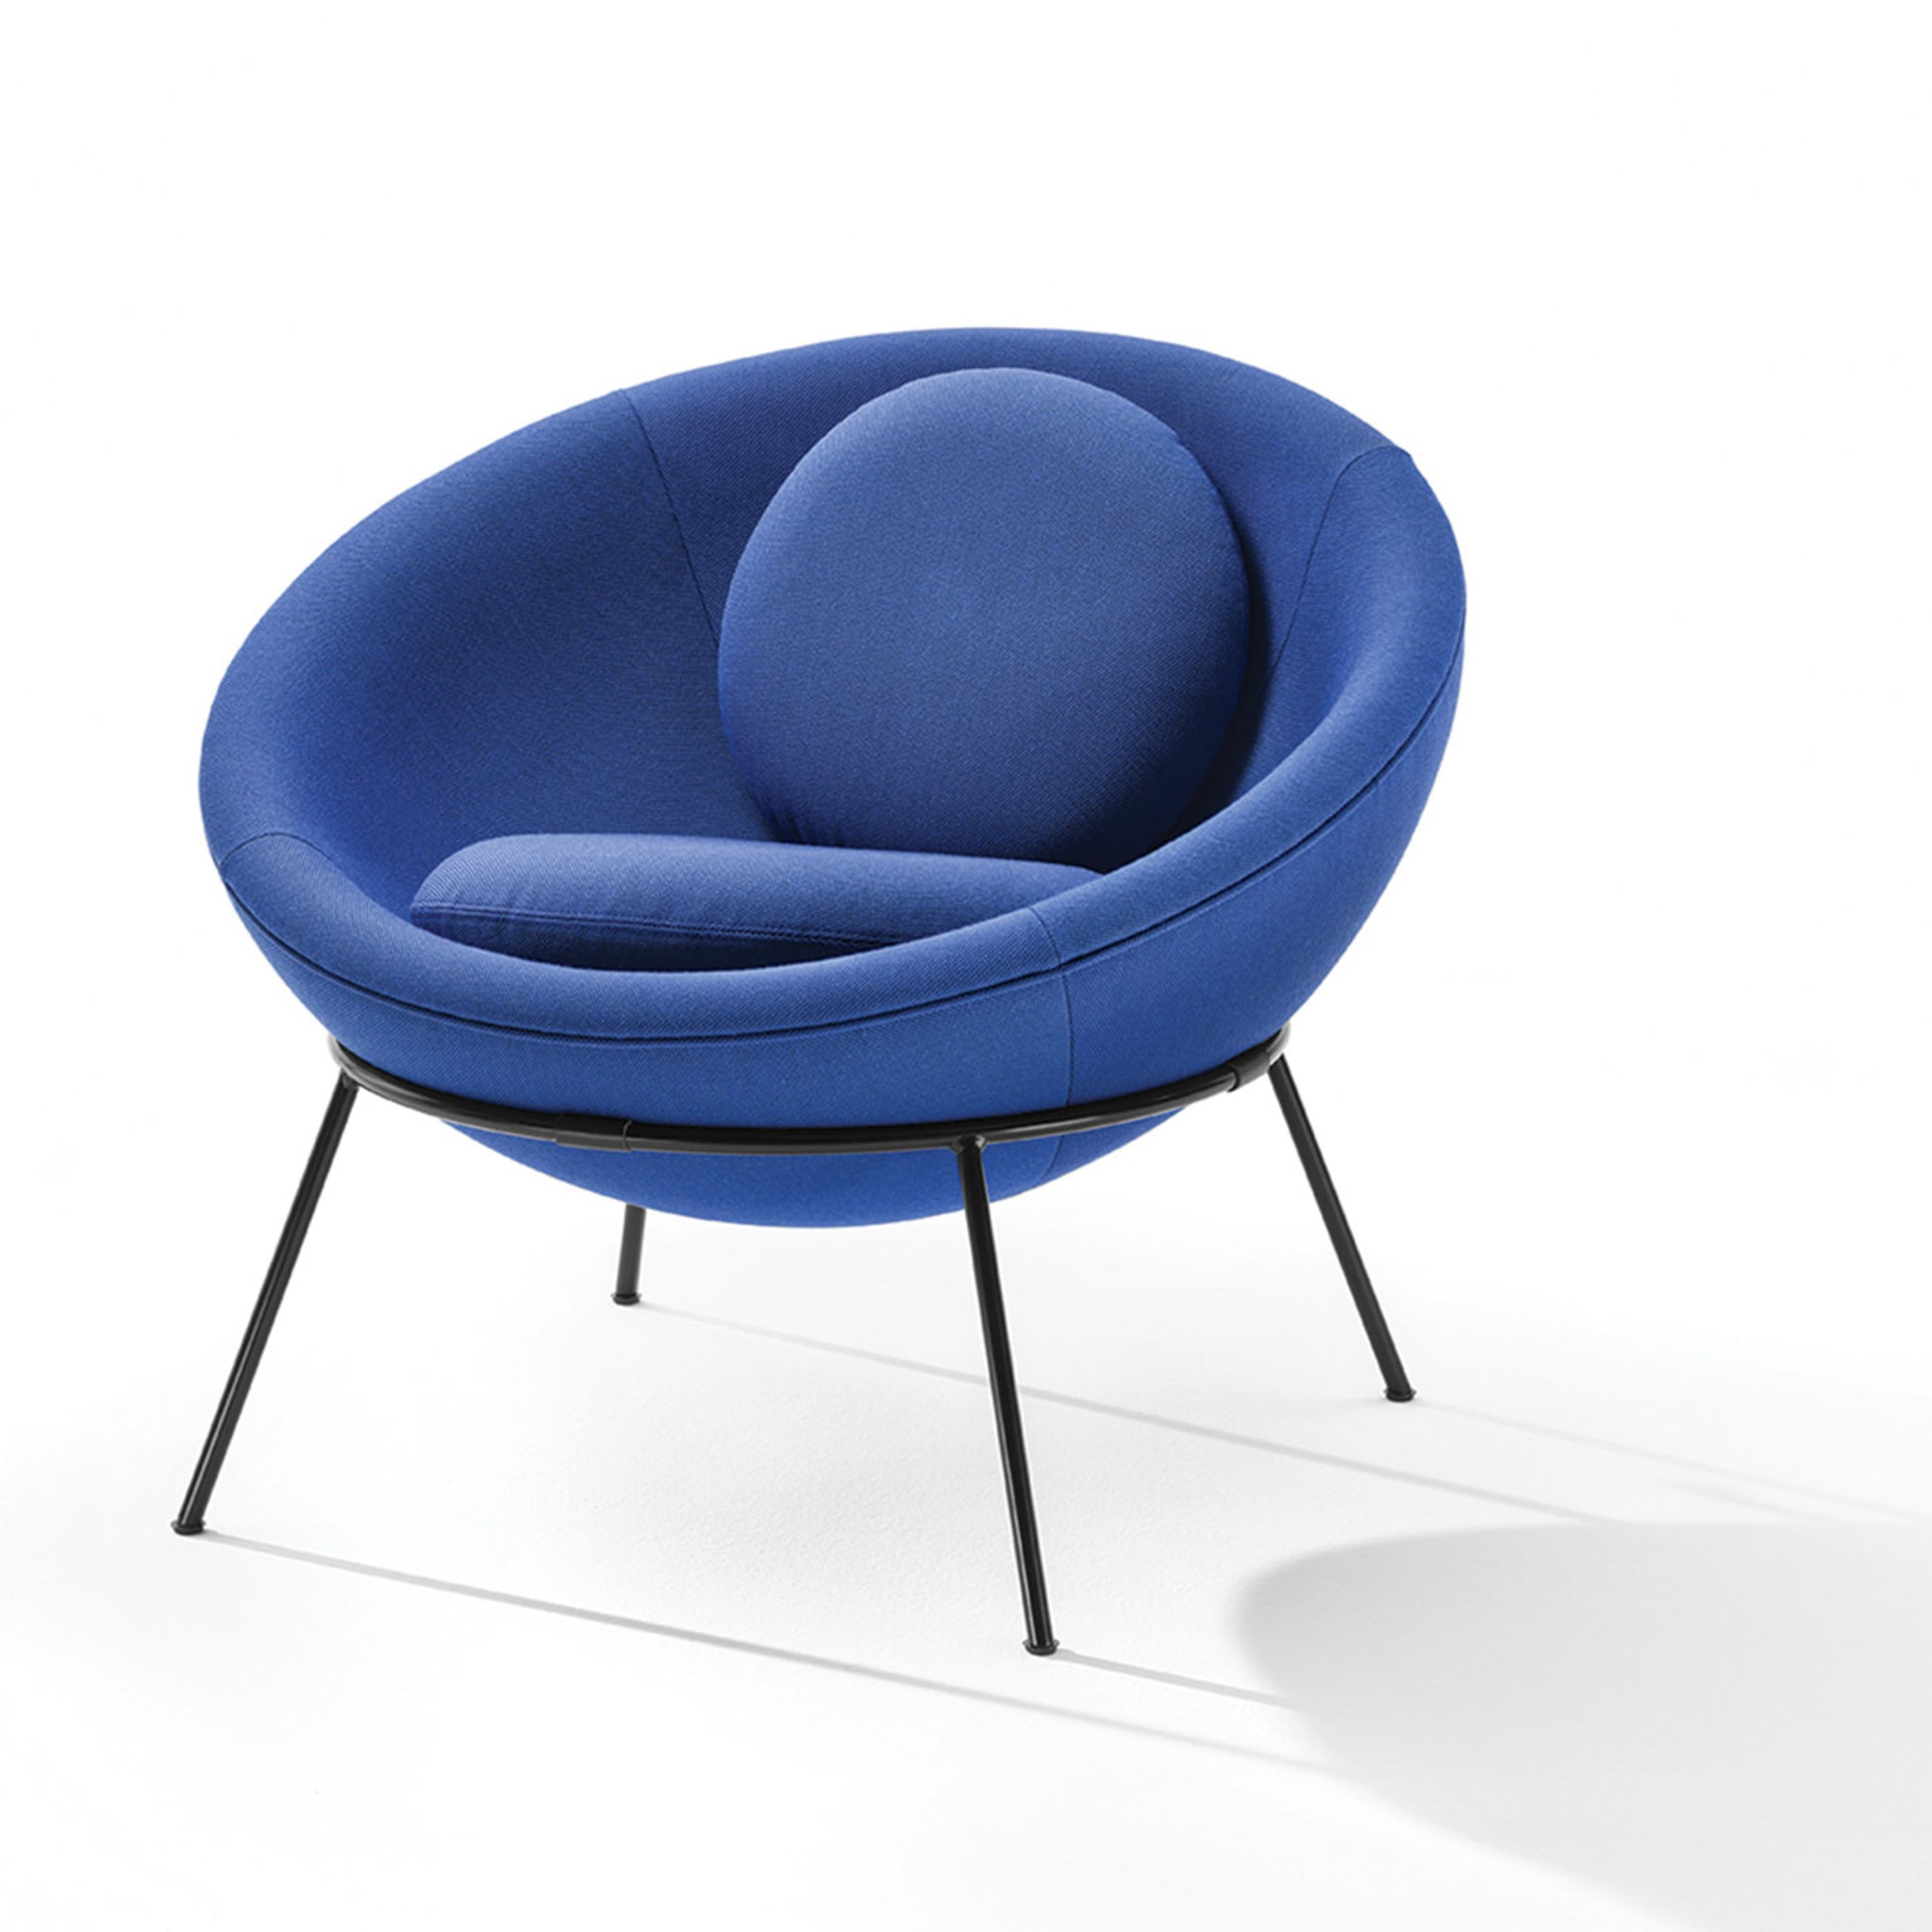 Bardi's Bowl Chair Shiny Blue  - Alternative view 1